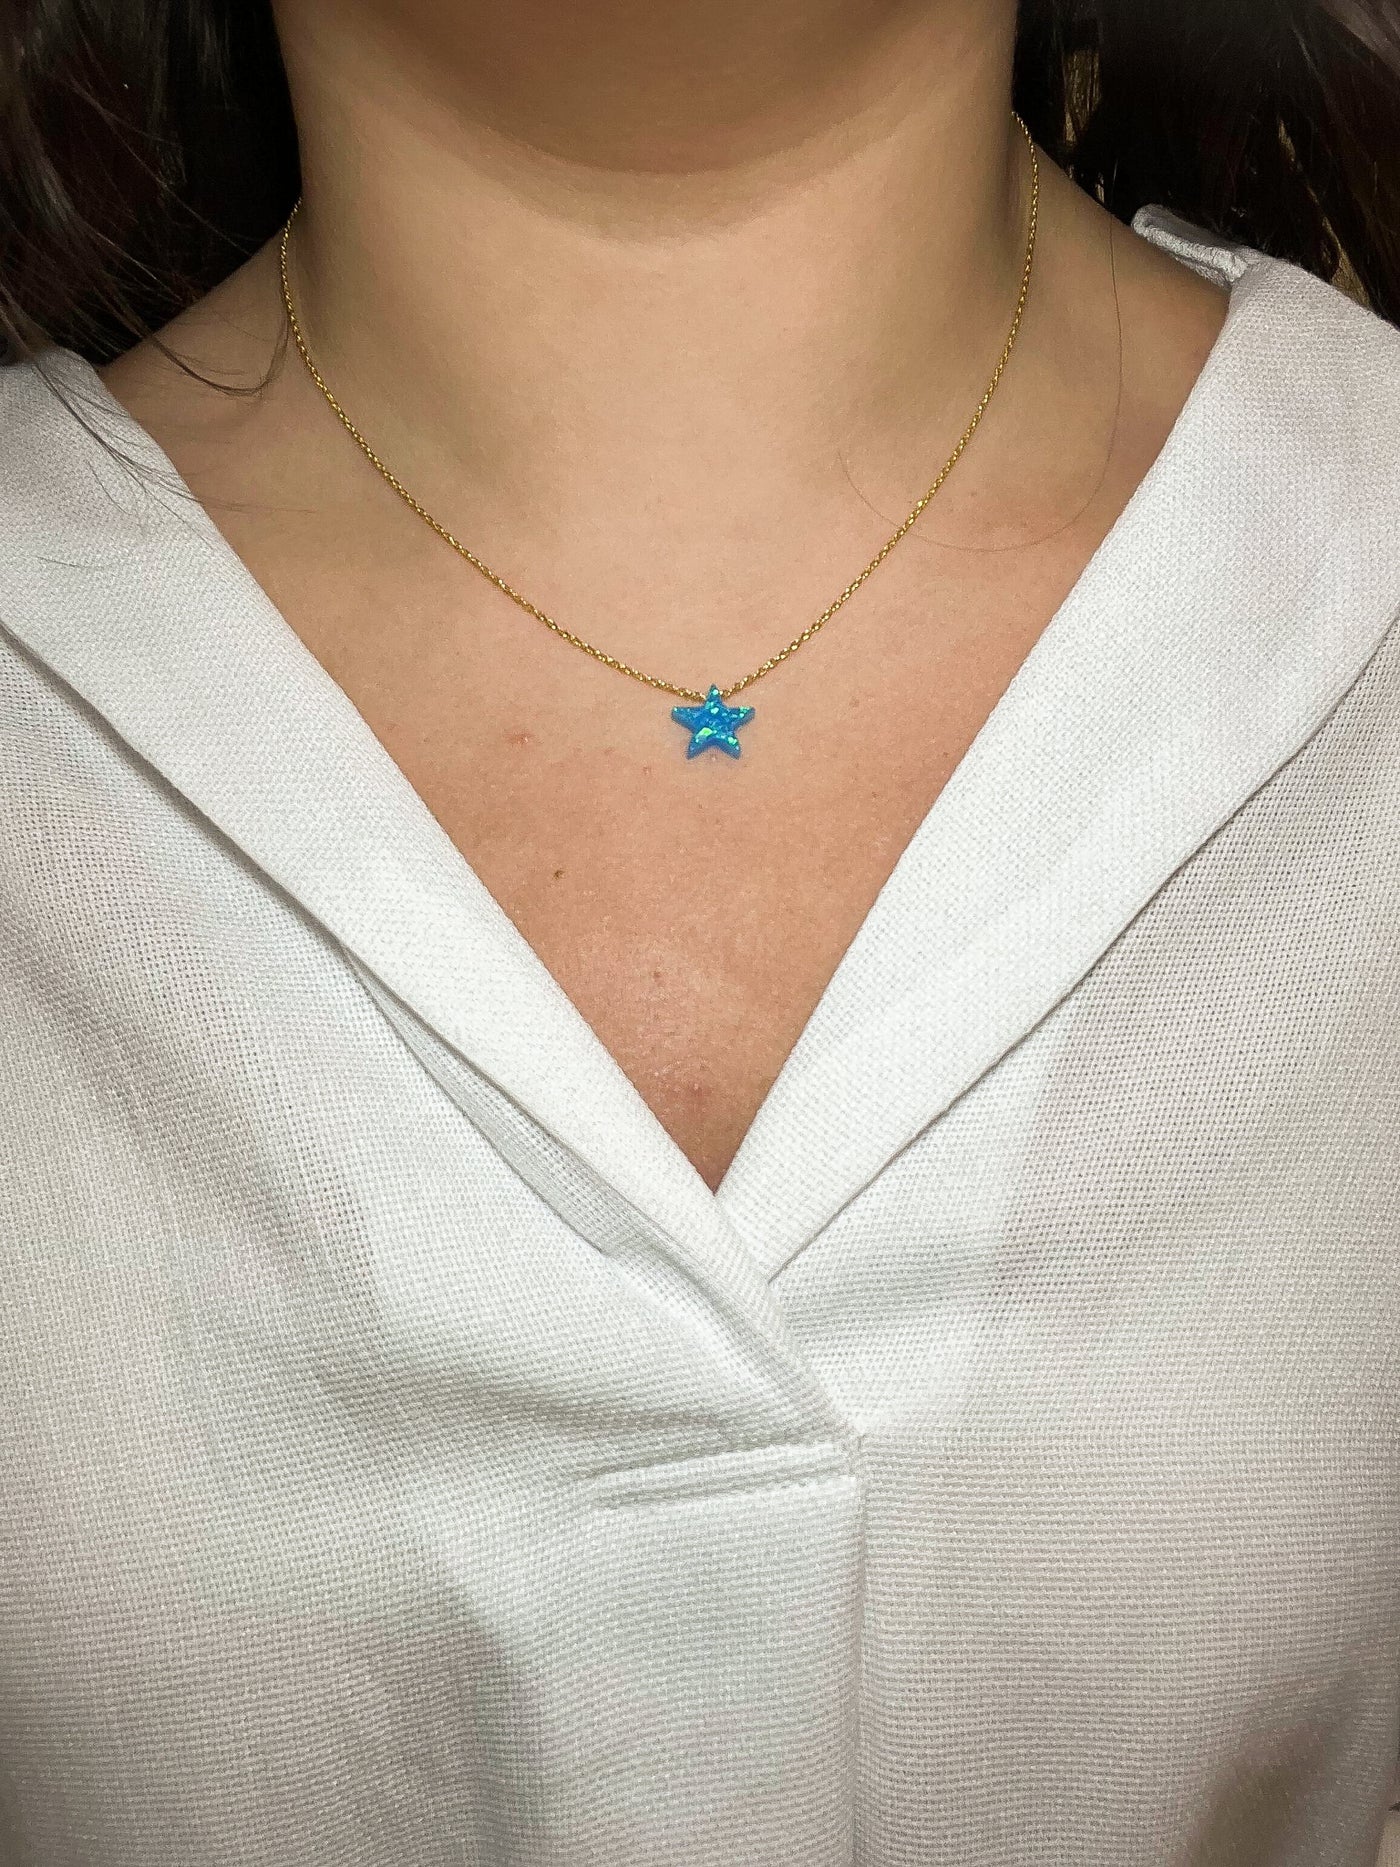 Simple Charm Necklace-190 - ACCESSORIES - JEWELRY-LEATHER & LACE-Blue Star-[option4]-[option5]-[option6]-Leather & Lace Boutique Shop